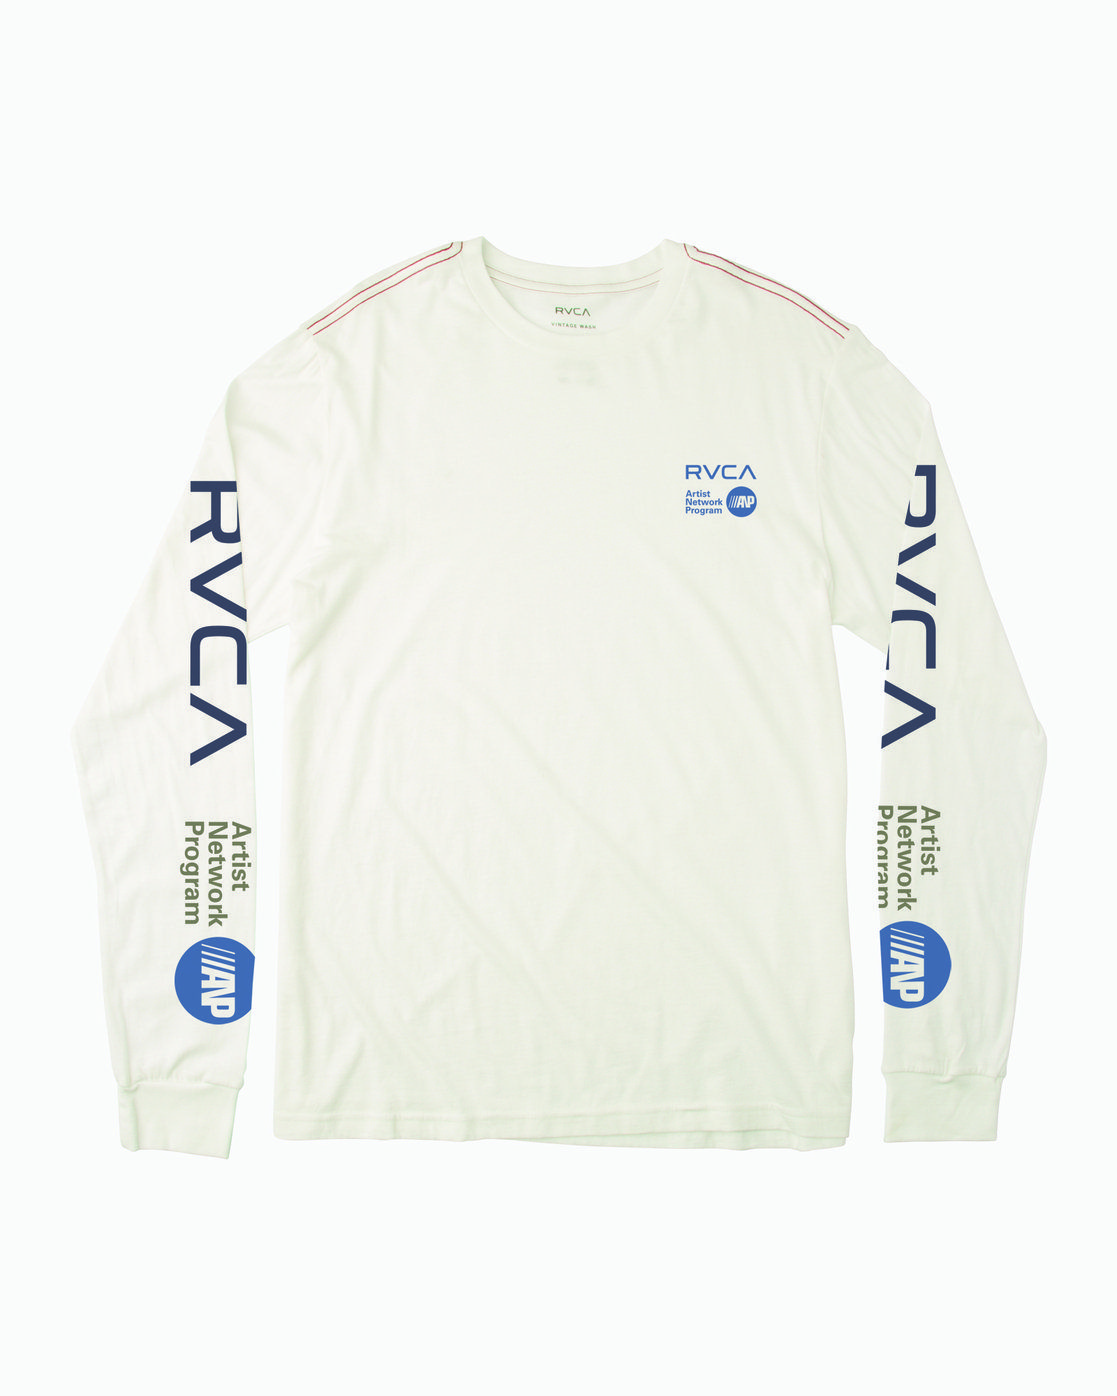 RVCA ANP Long-Sleeve Shirt 